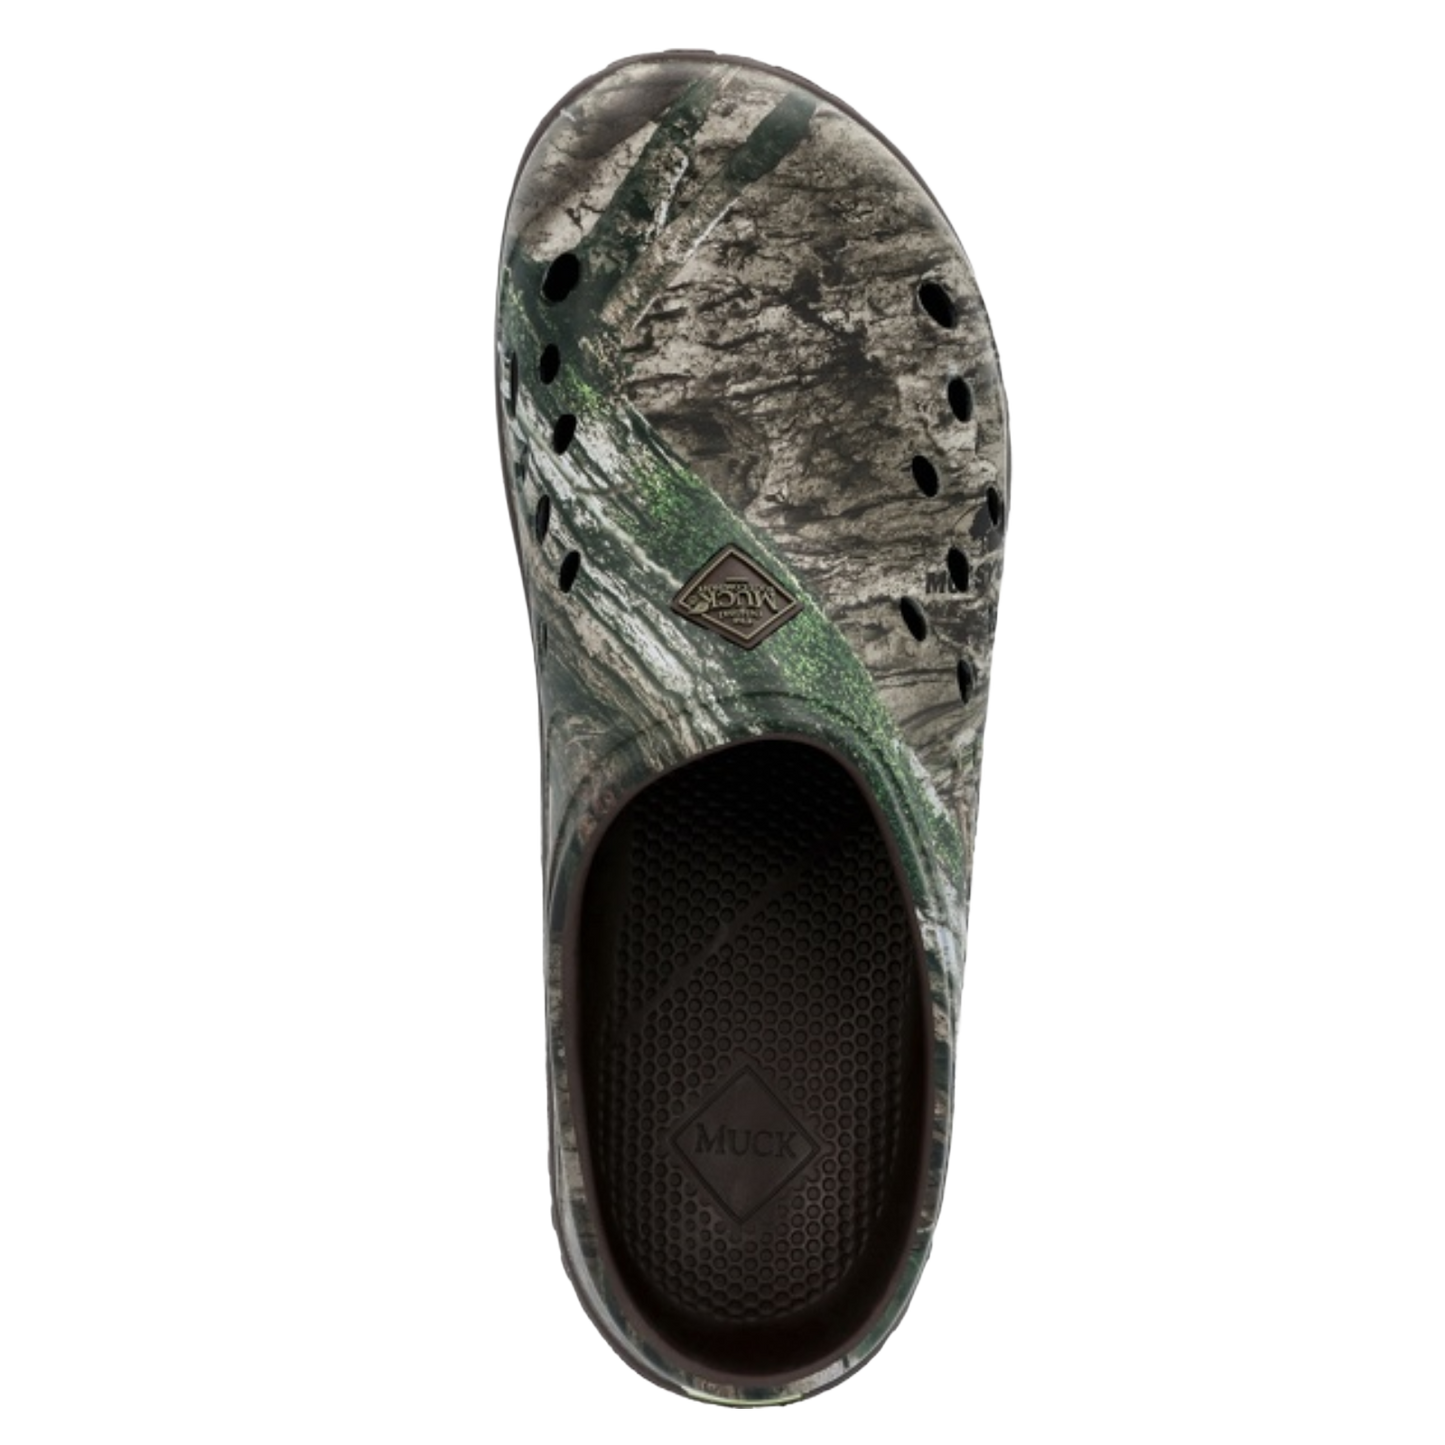 Muck® Men's Muckster Camouflage Lite Clog Slip On Shoes MLCMDNA